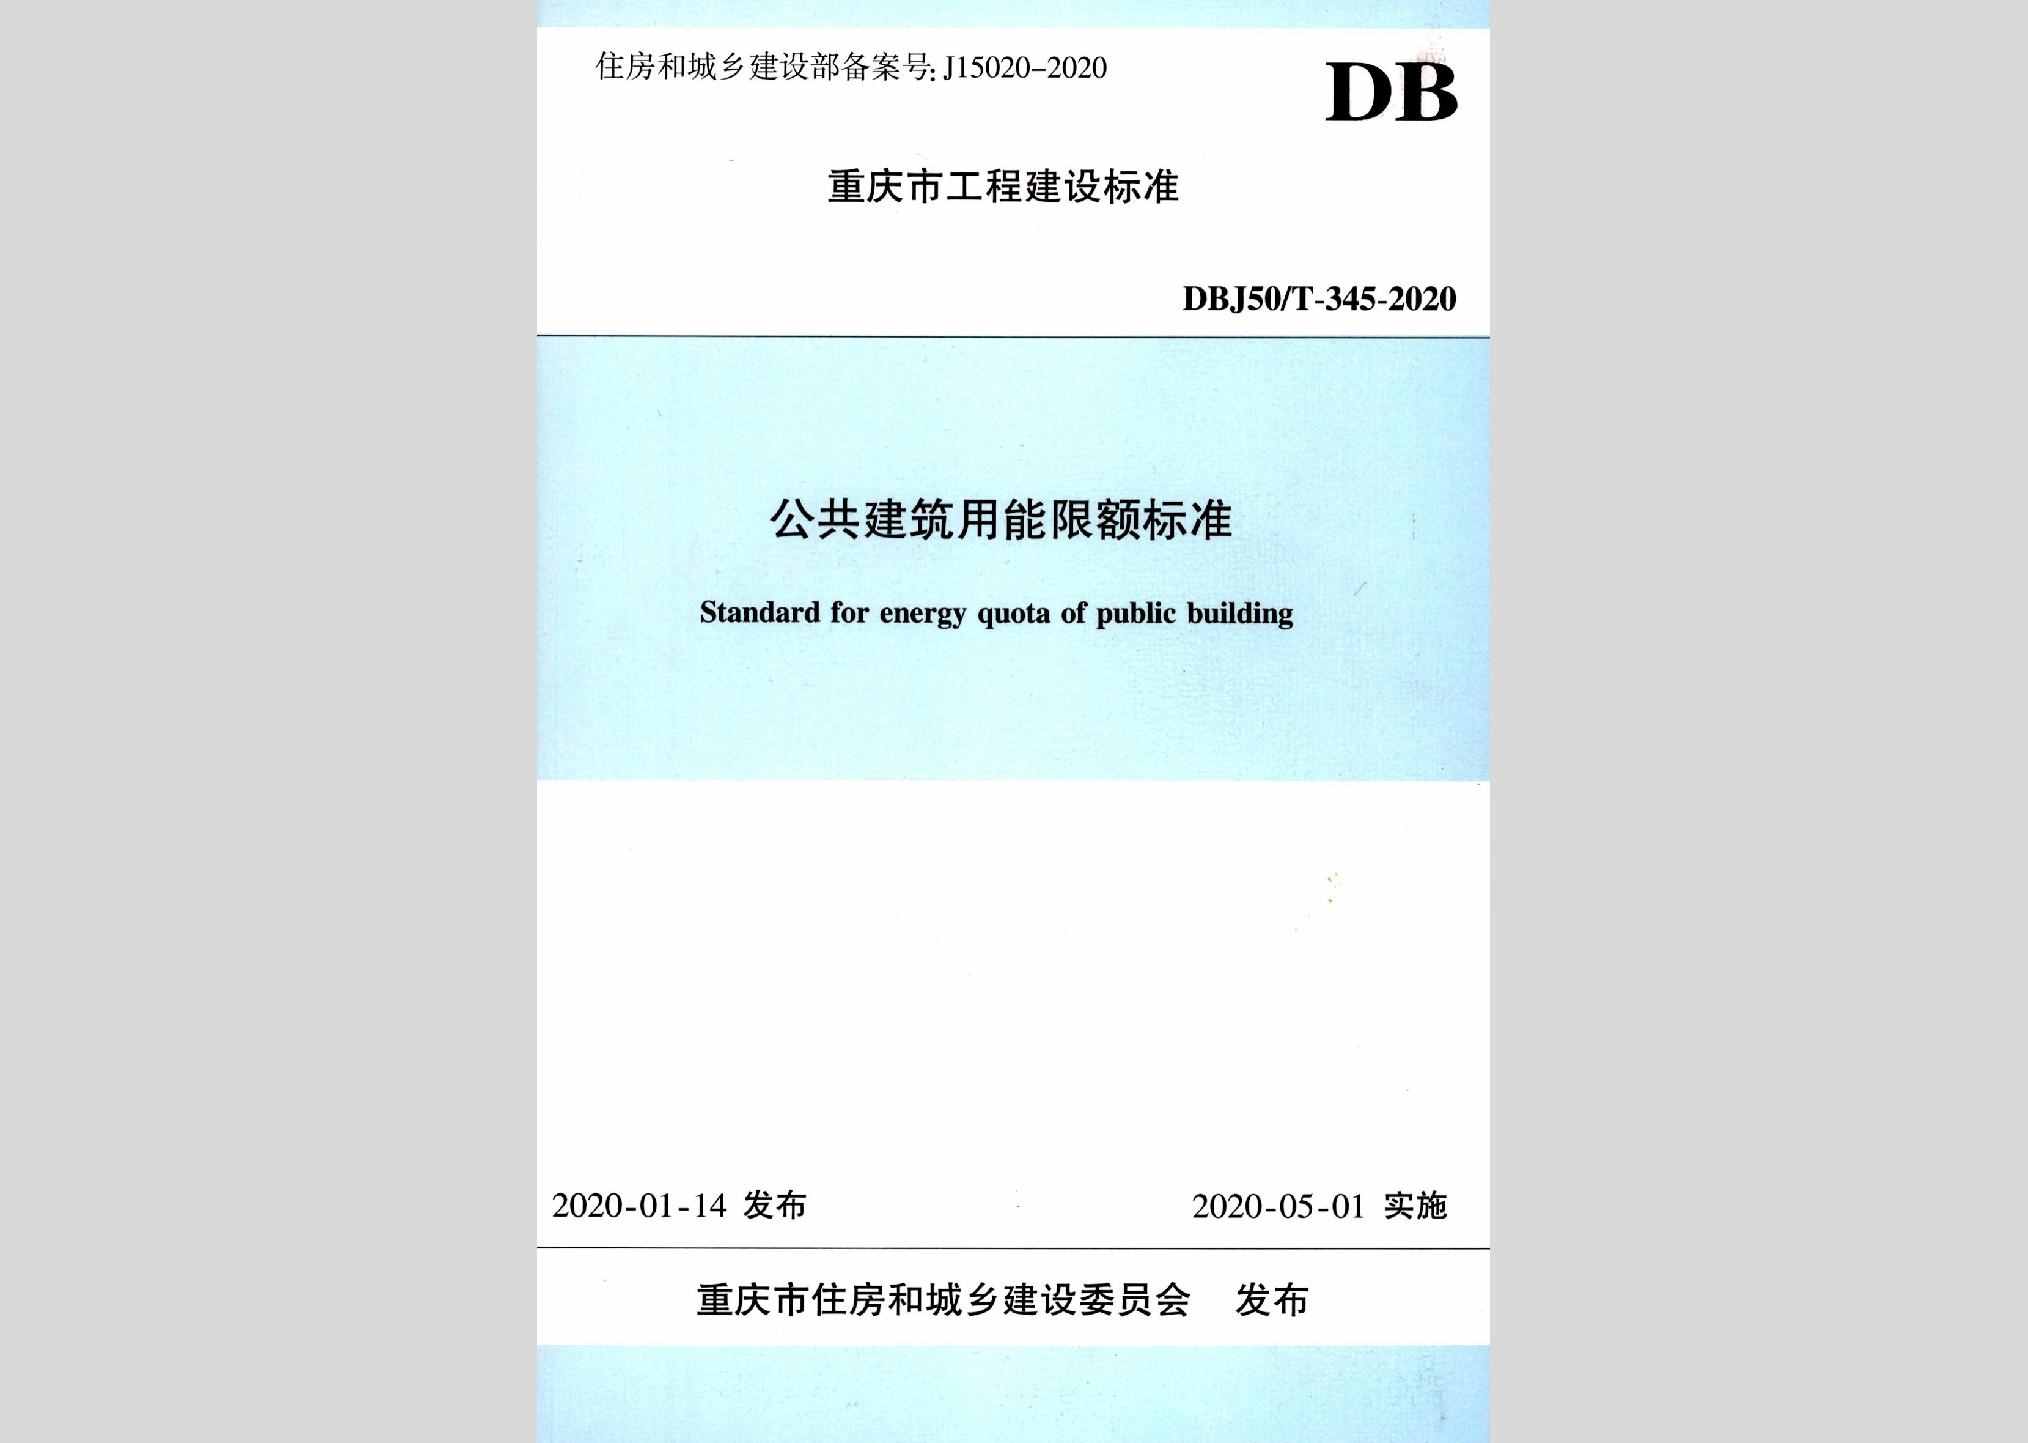 DBJ50/T-345-2020：公共建筑用能限额标准